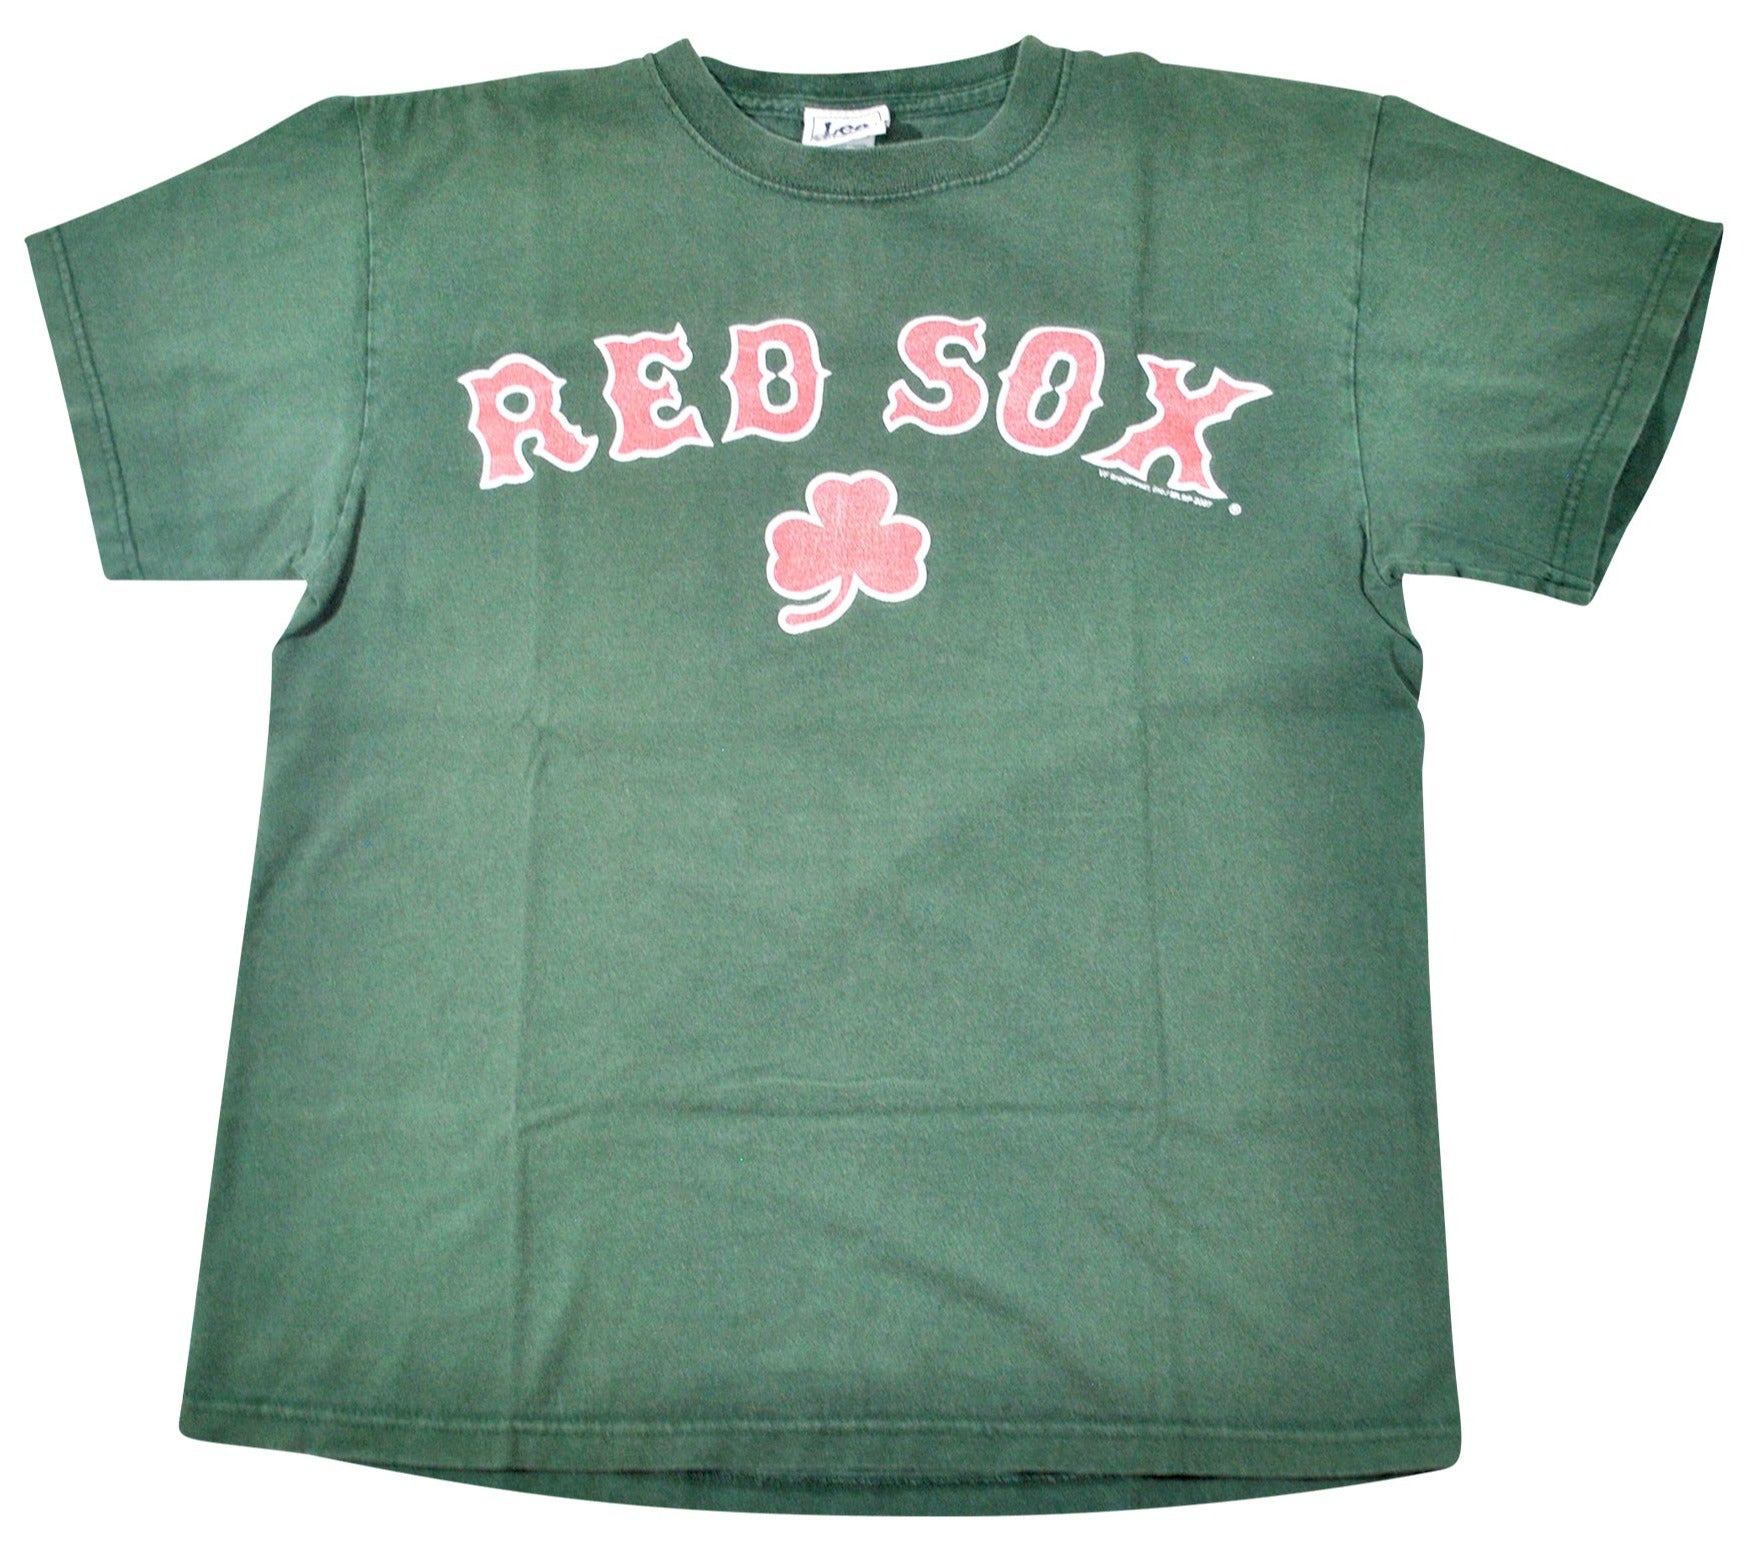 Vintage Boston Sox Shirt Size Medium – Yesterday's Attic